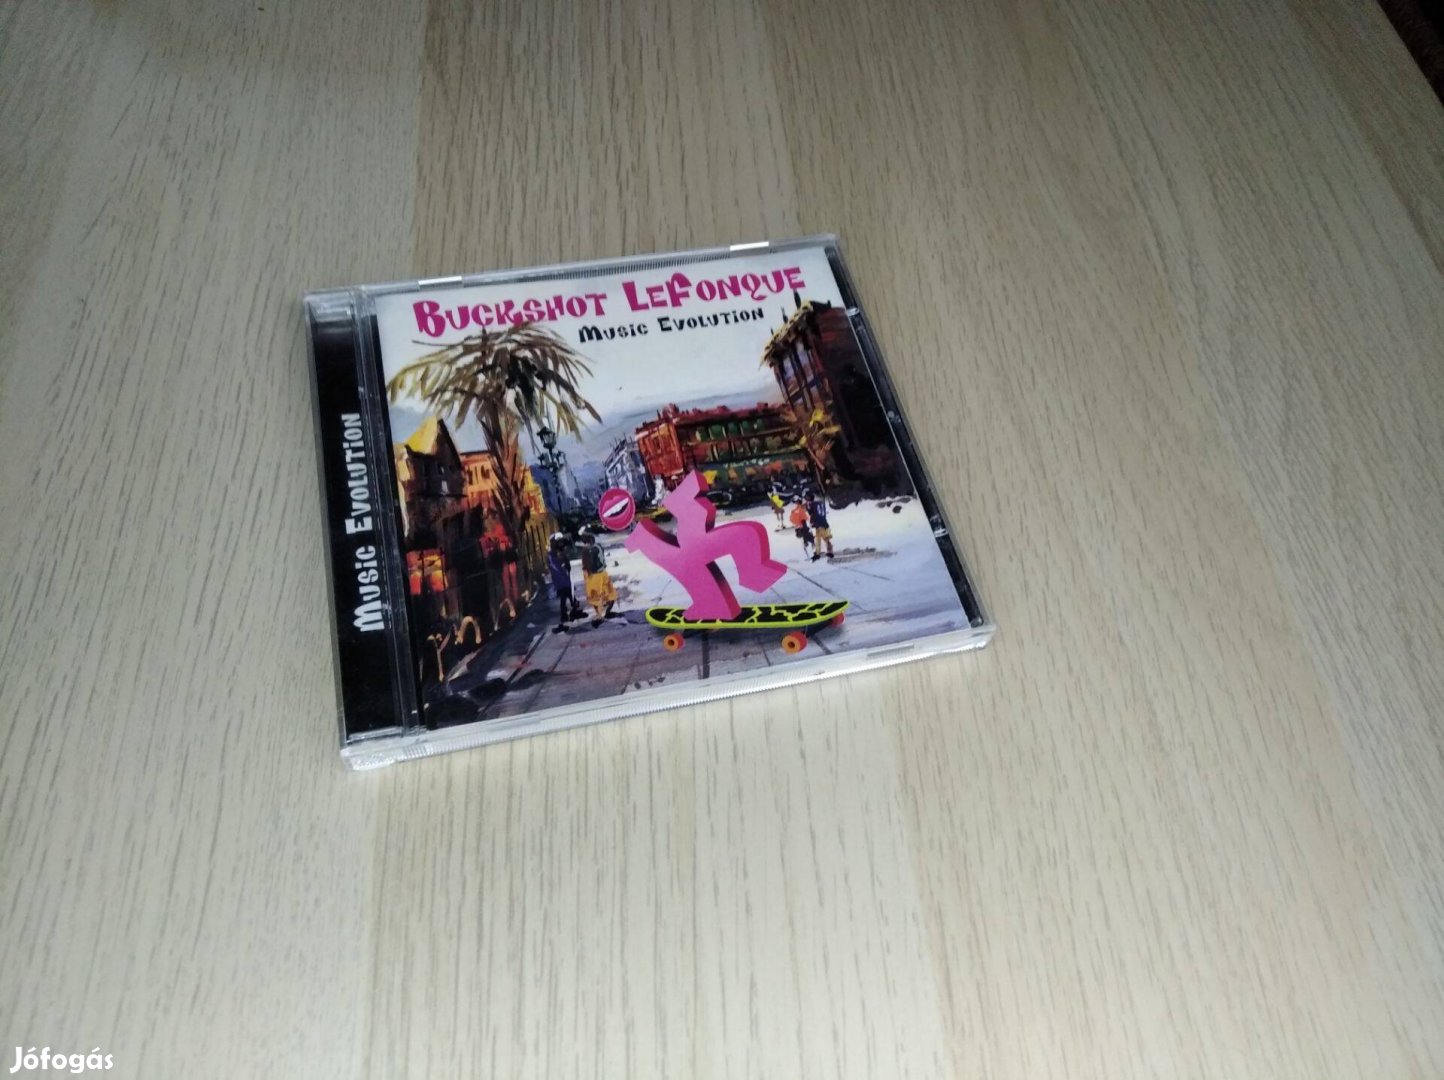 Buckshot Lefonque - Music Evolution / CD